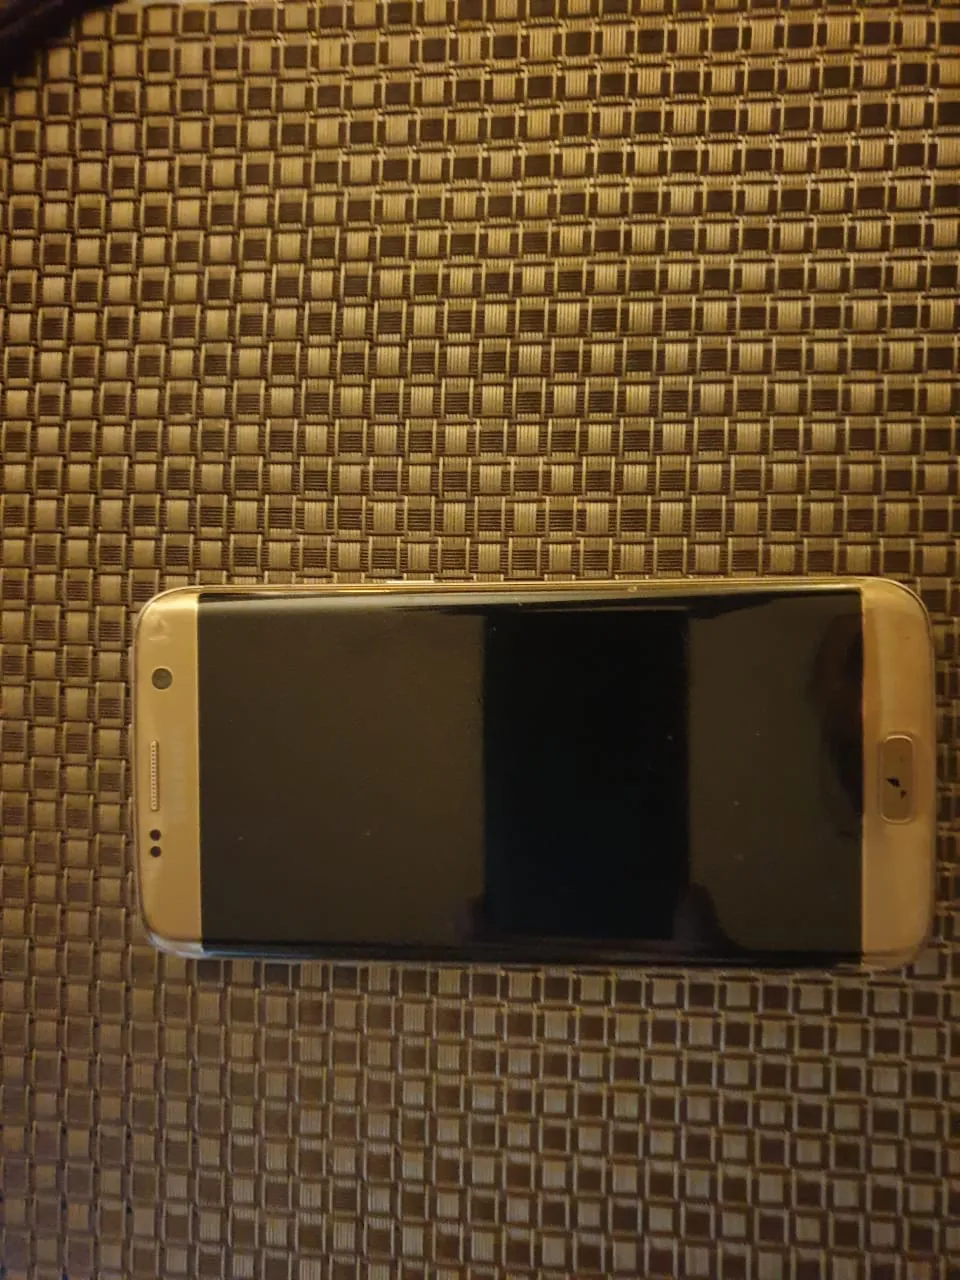 Galaxy S7 edge - photo 1